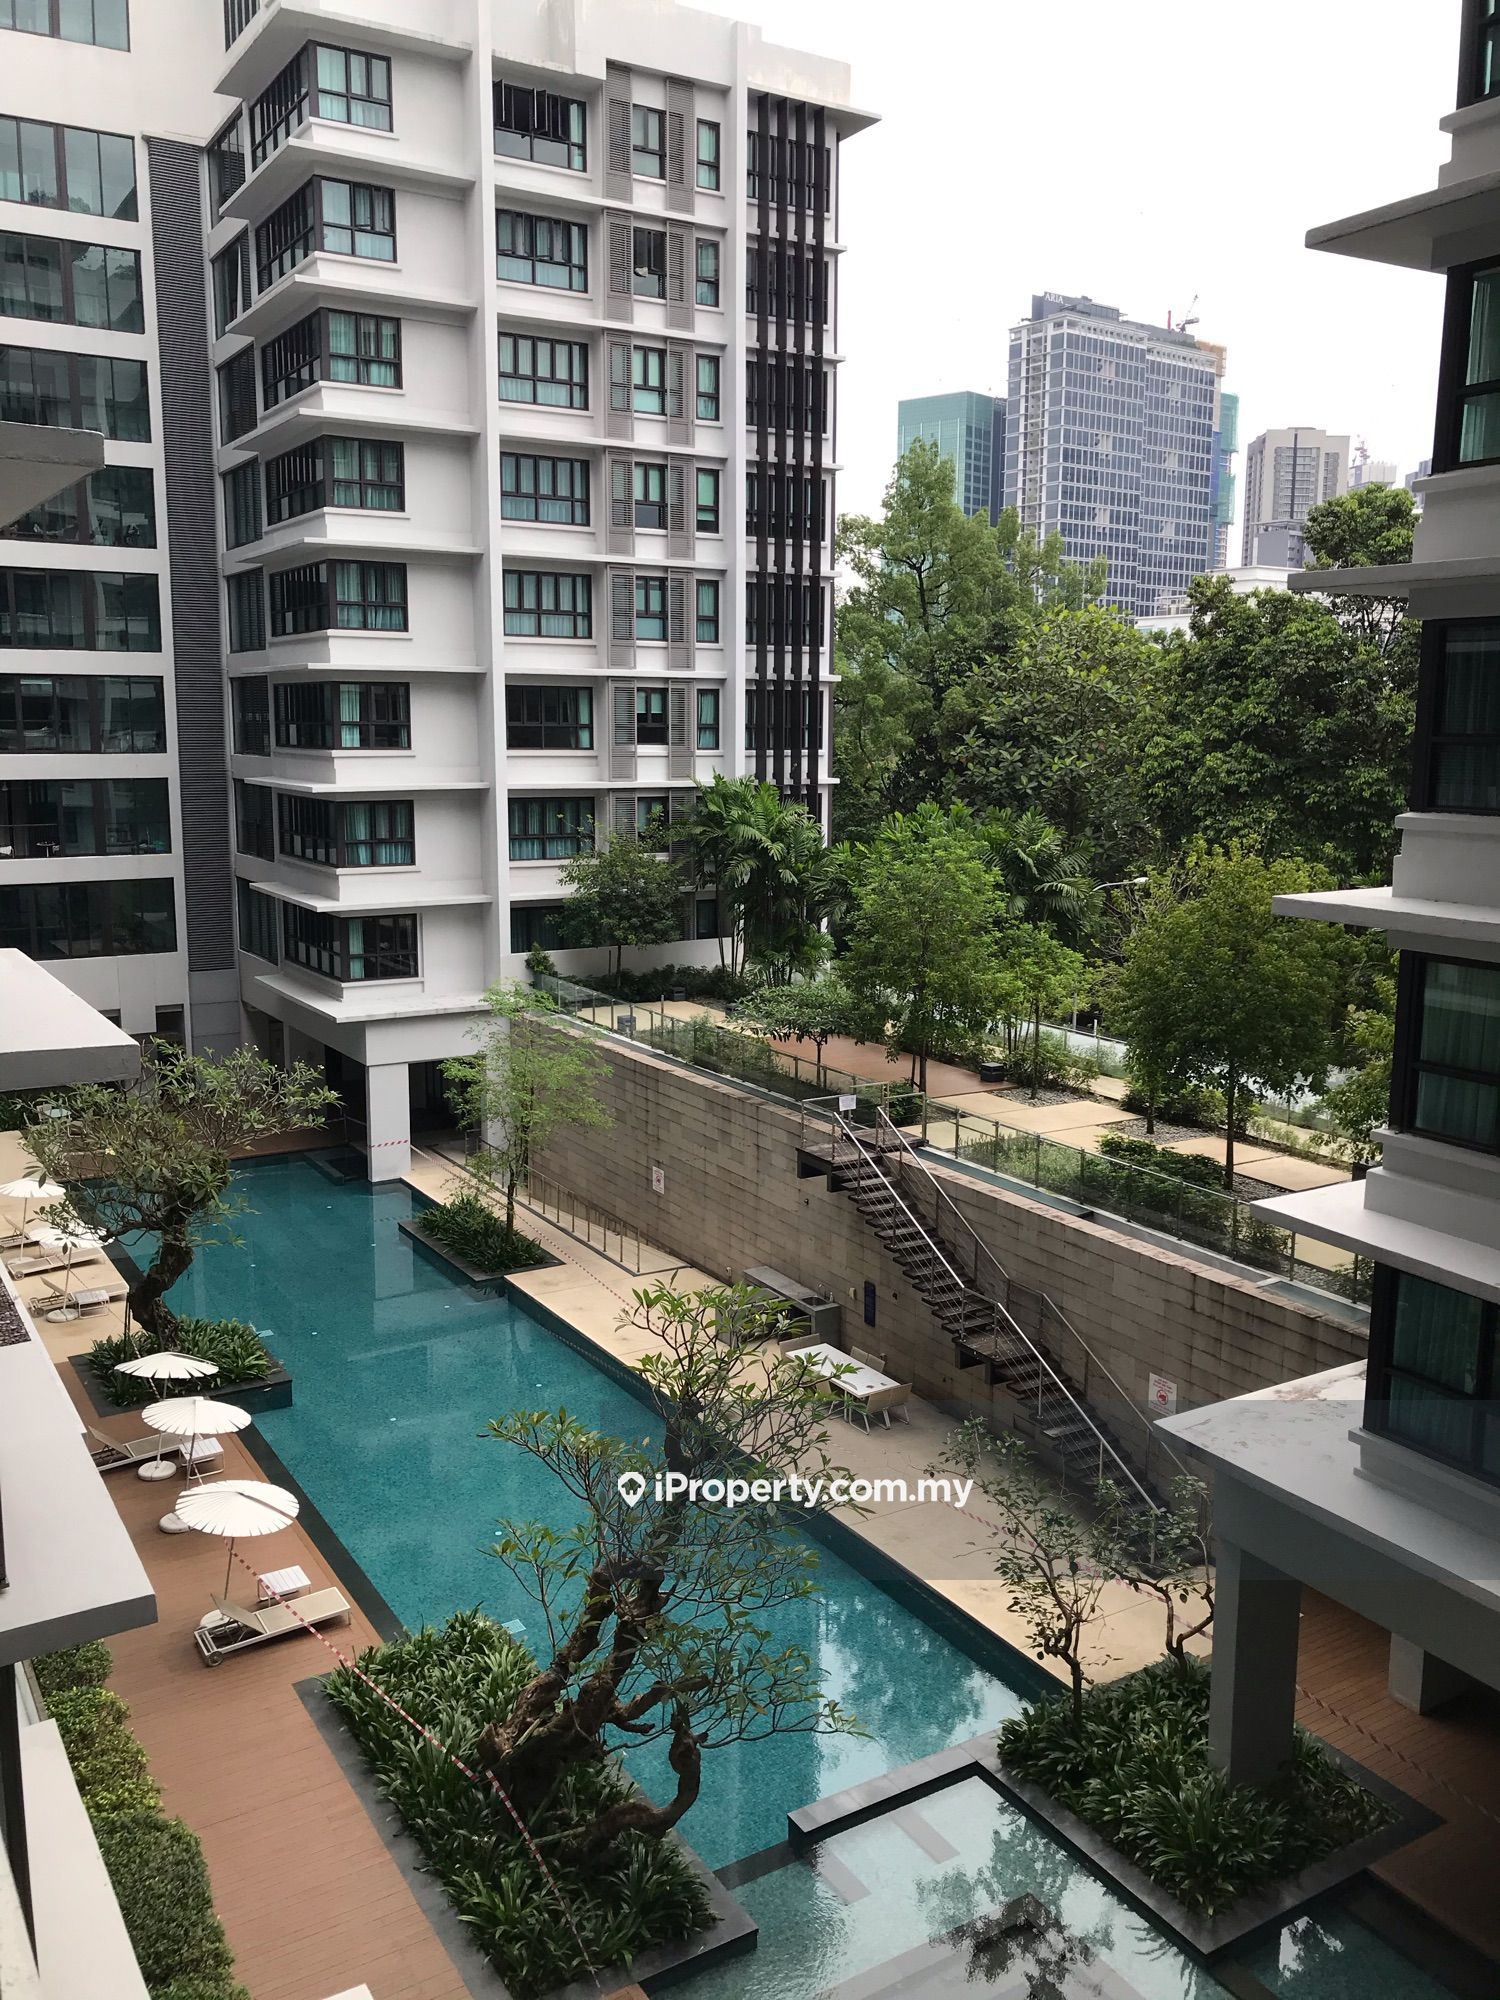 Sastra U Thant Condominium 4 1 Bedrooms For Sale In Ampang Hilir Kuala Lumpur Iproperty Com My